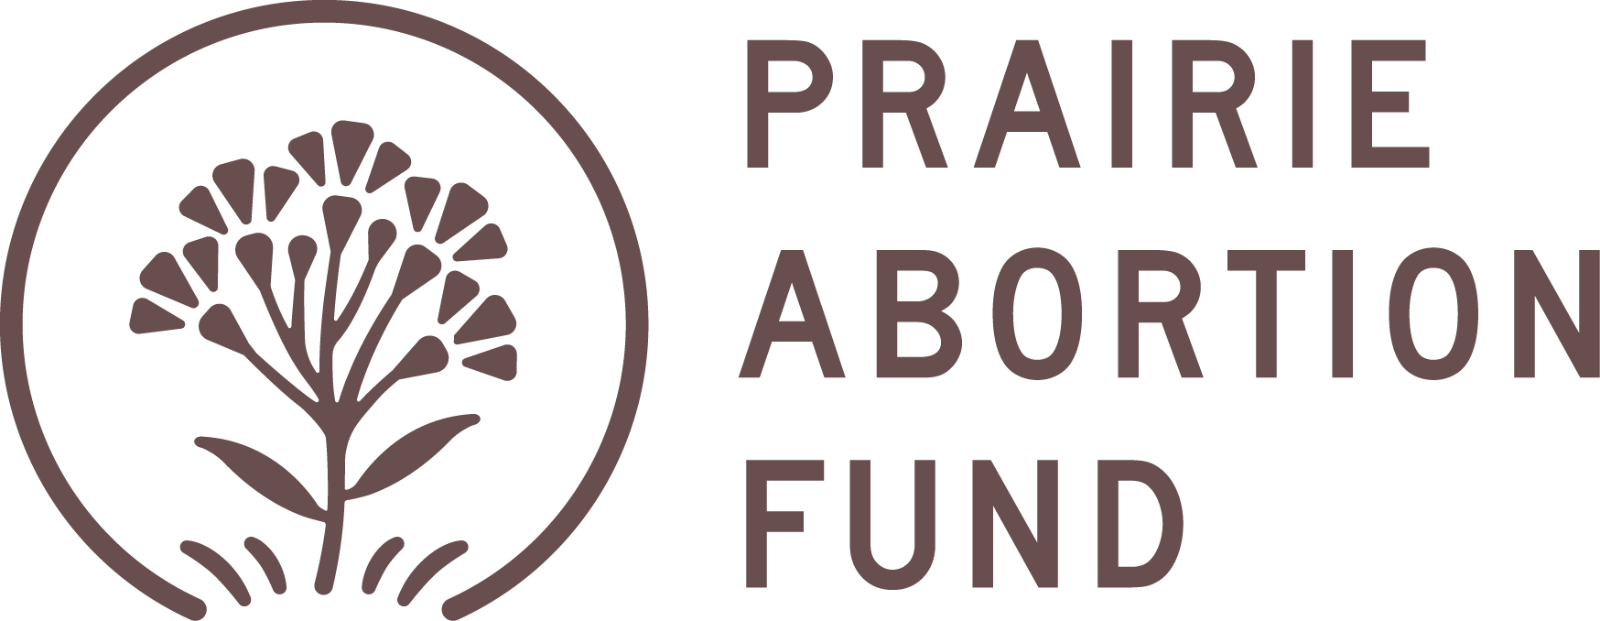 PAF-logo-primary-terra.png